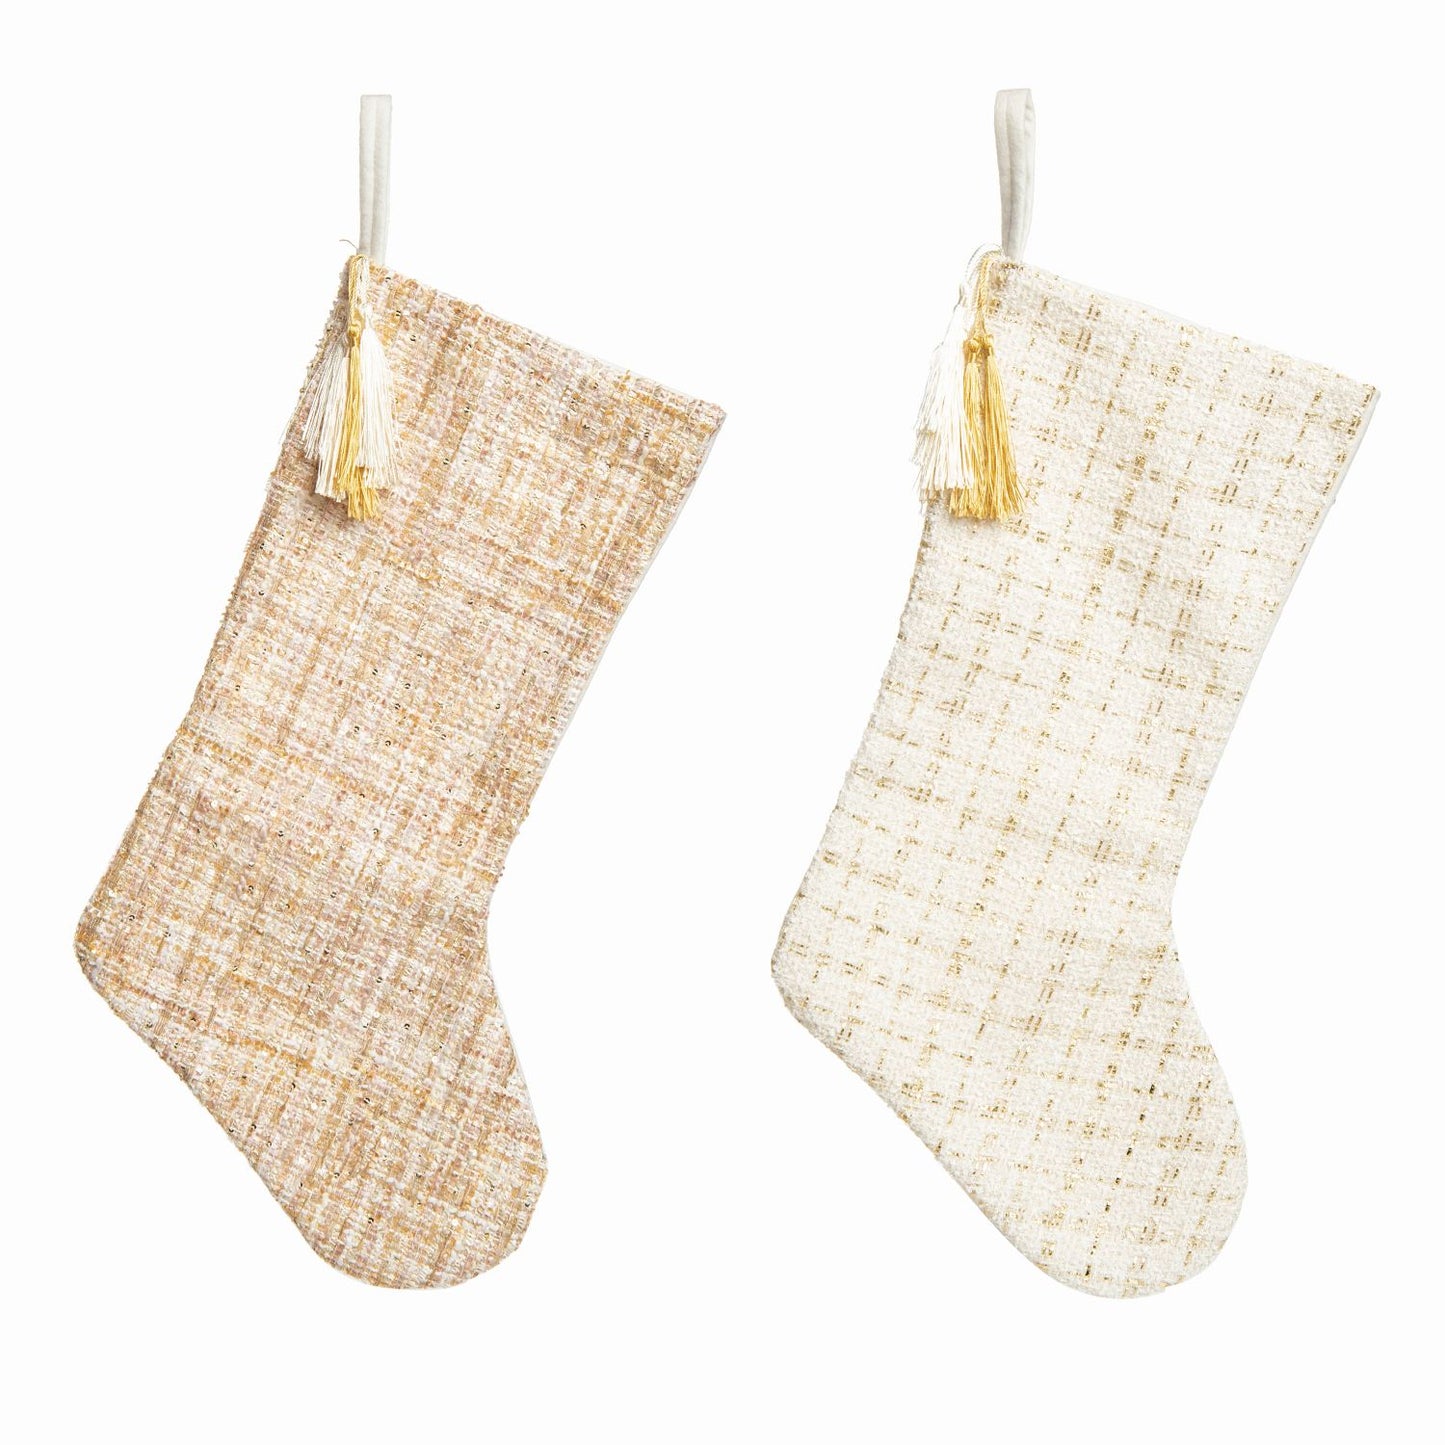 Transpac Plush Elegant Tweed Stocking, Set Of 2, Assortment